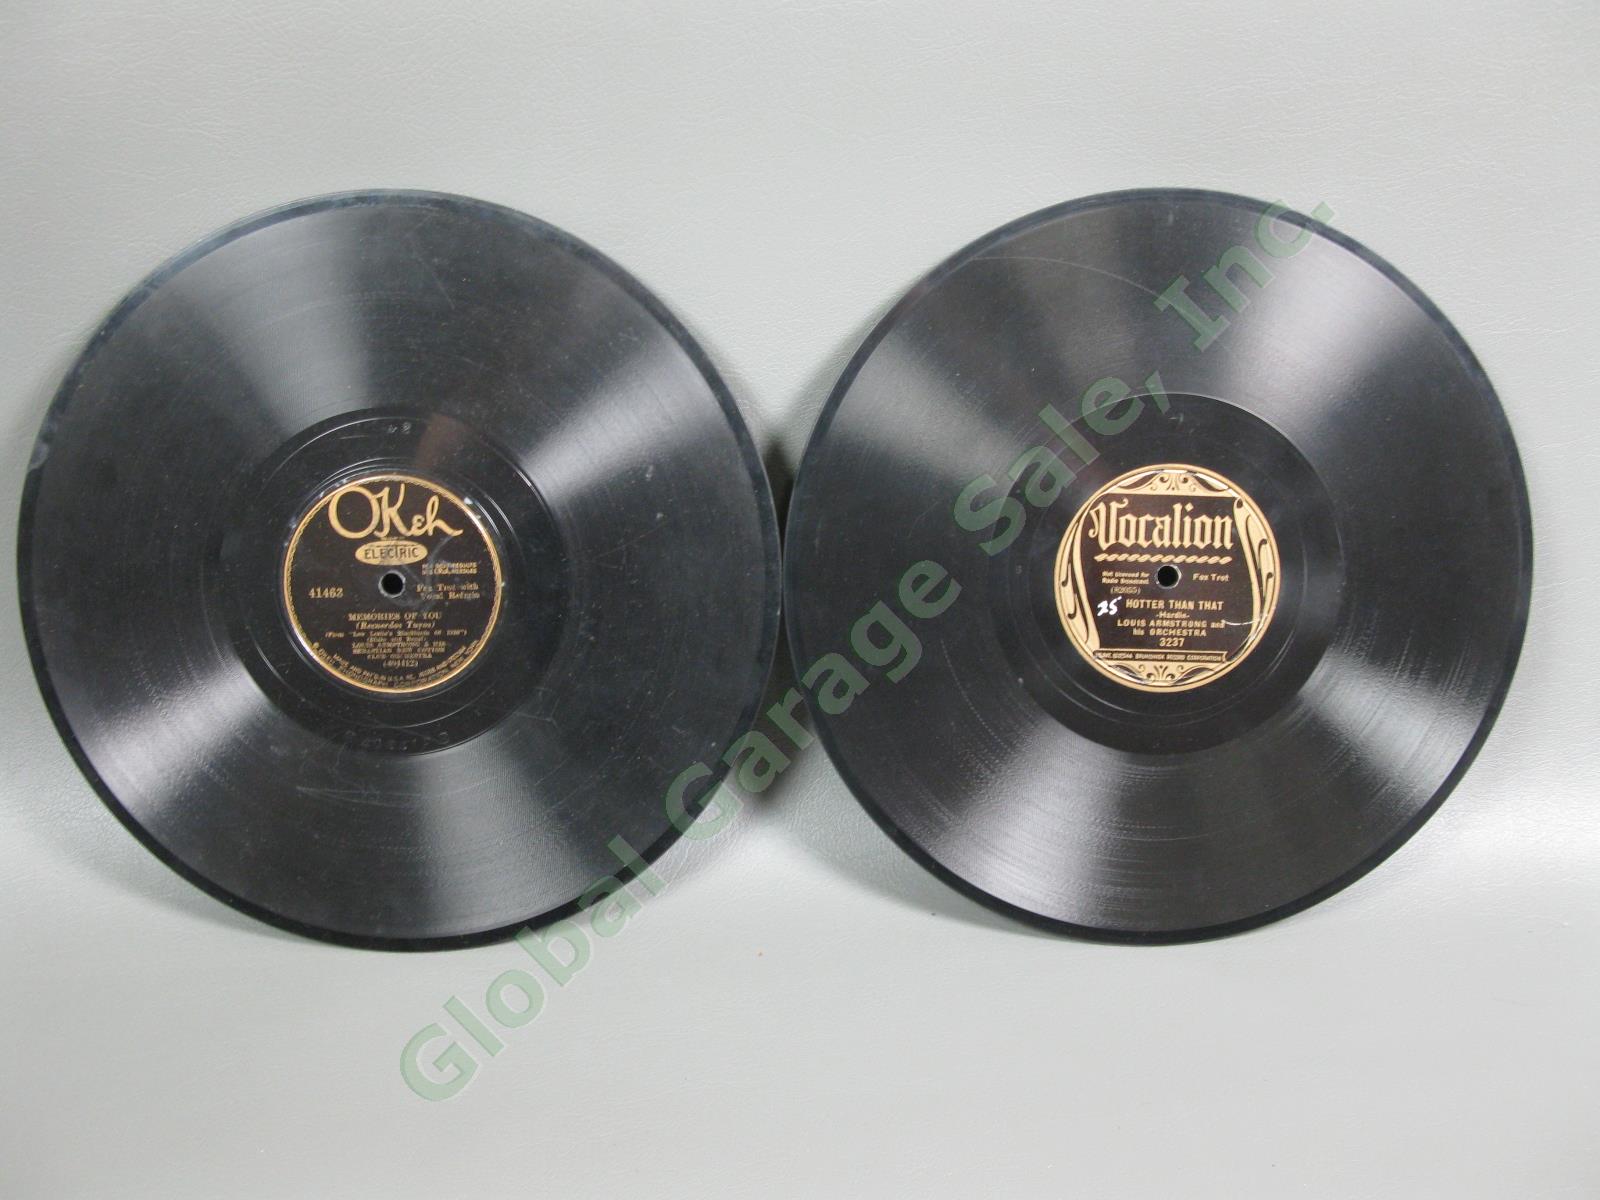 6 Vintage 10" 78rpm Louis Armstrong Vinyl Record Album Jazz Foxtrot Collection 1